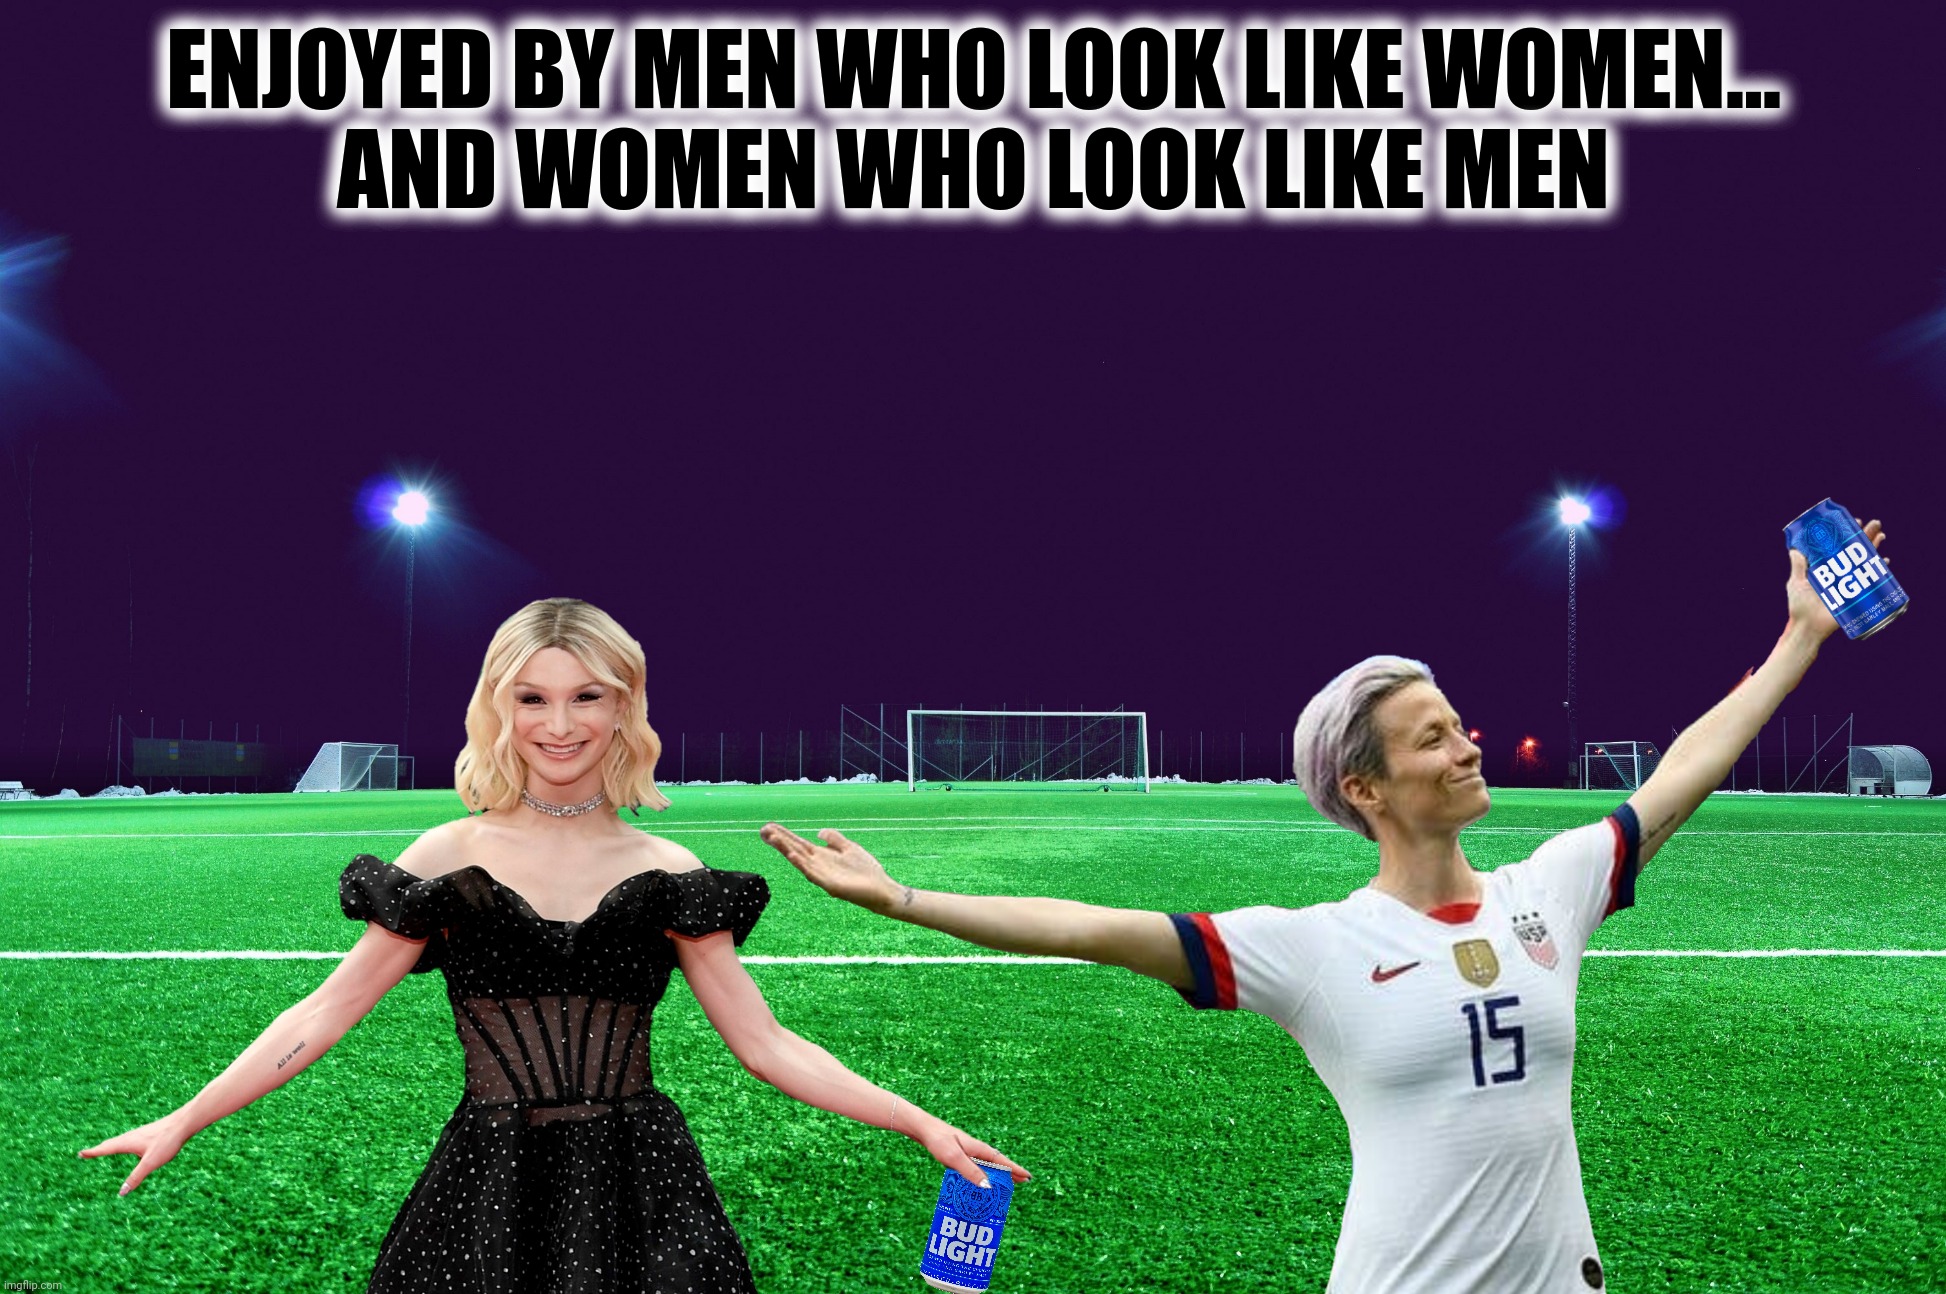 ENJOYED BY MEN WHO LOOK LIKE WOMEN...
AND WOMEN WHO LOOK LIKE MEN | made w/ Imgflip meme maker